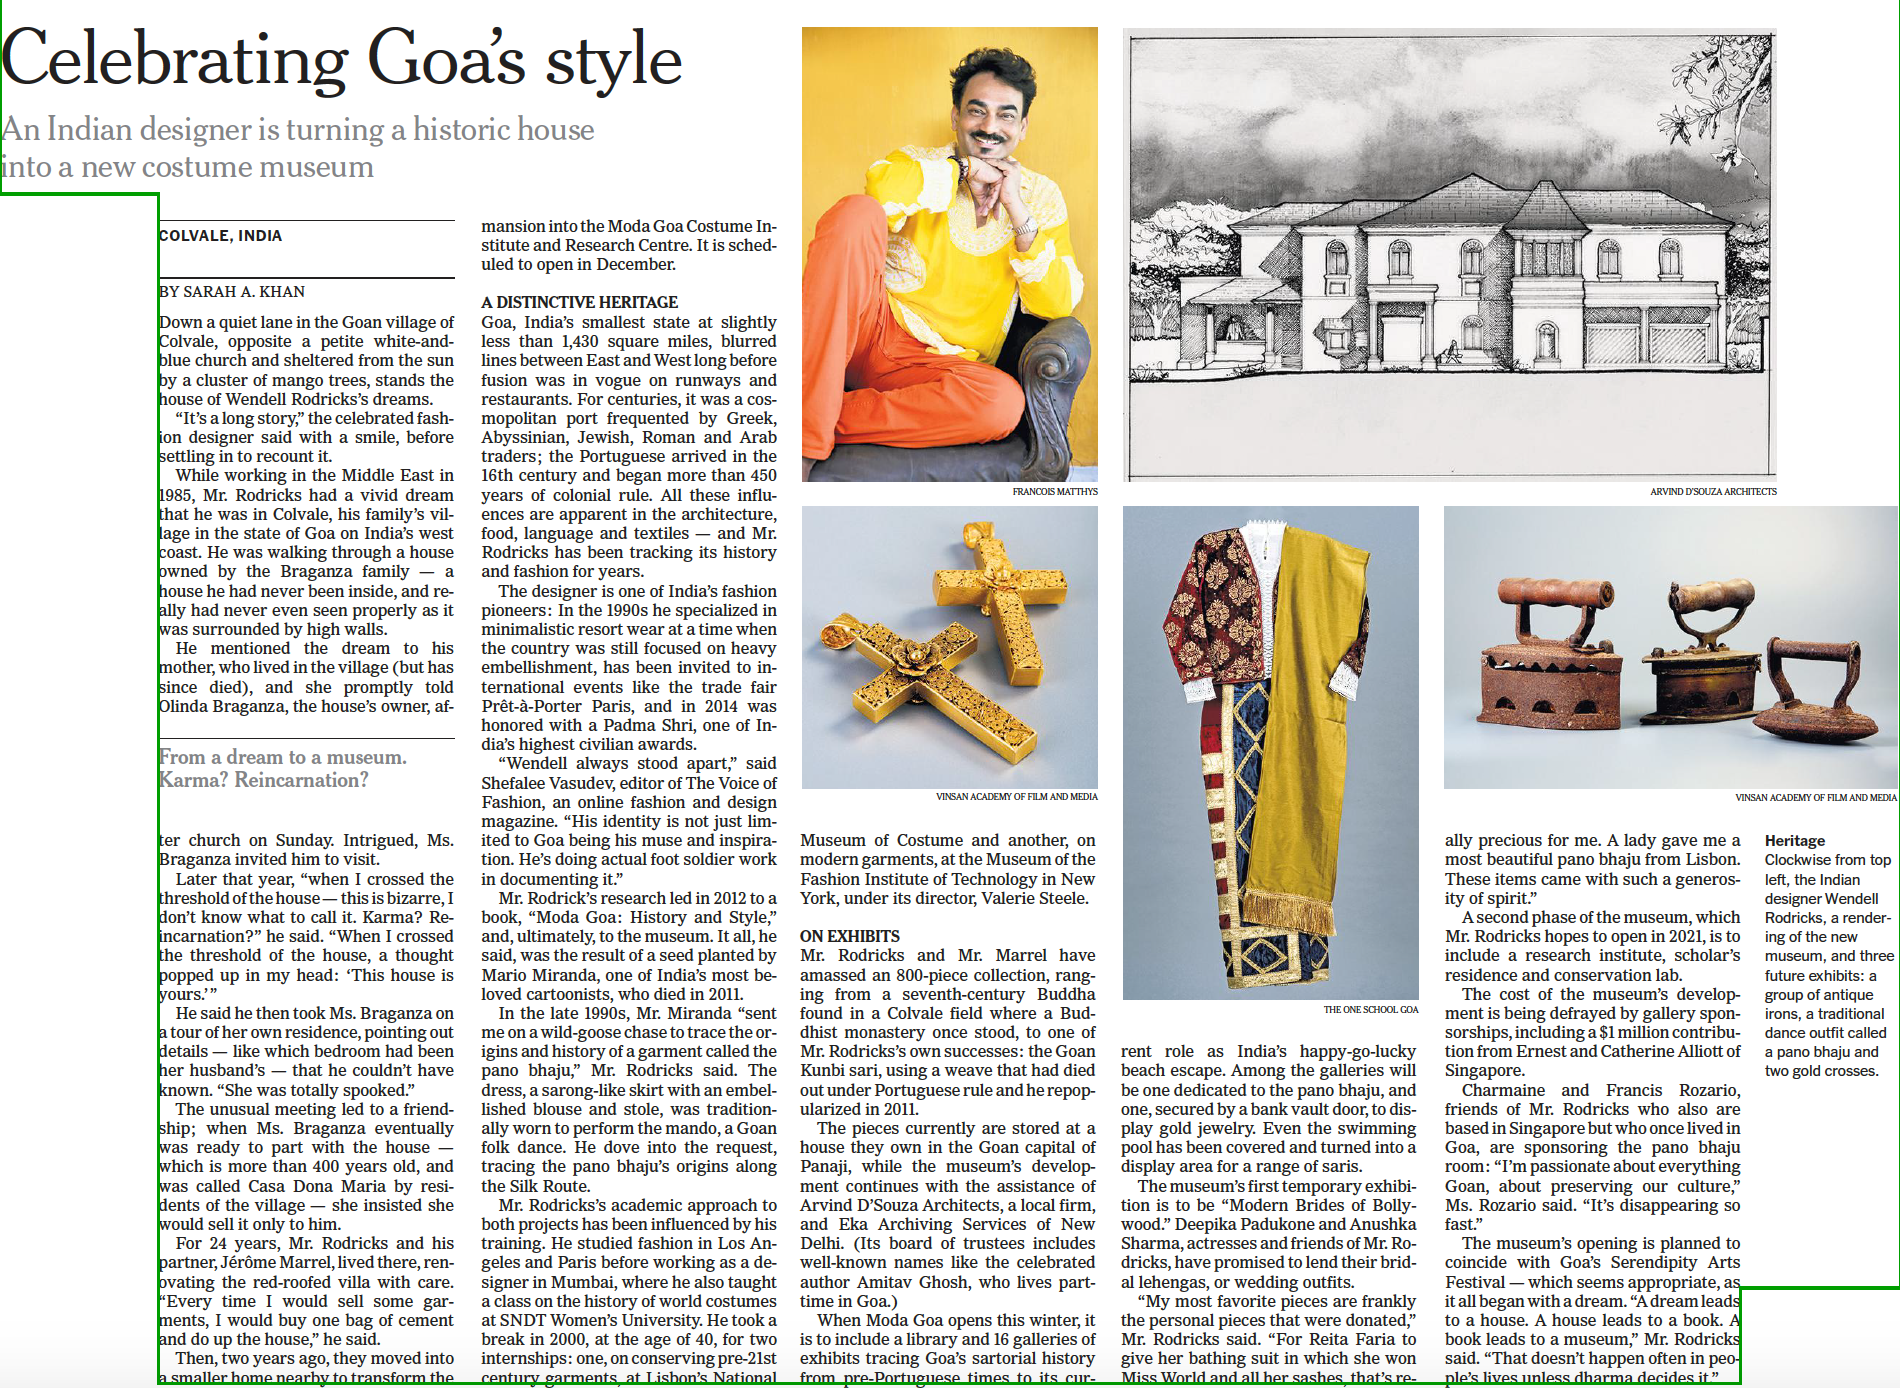 New York Times: Isn’t Goa Style a Bikini? Not According to a New Museum